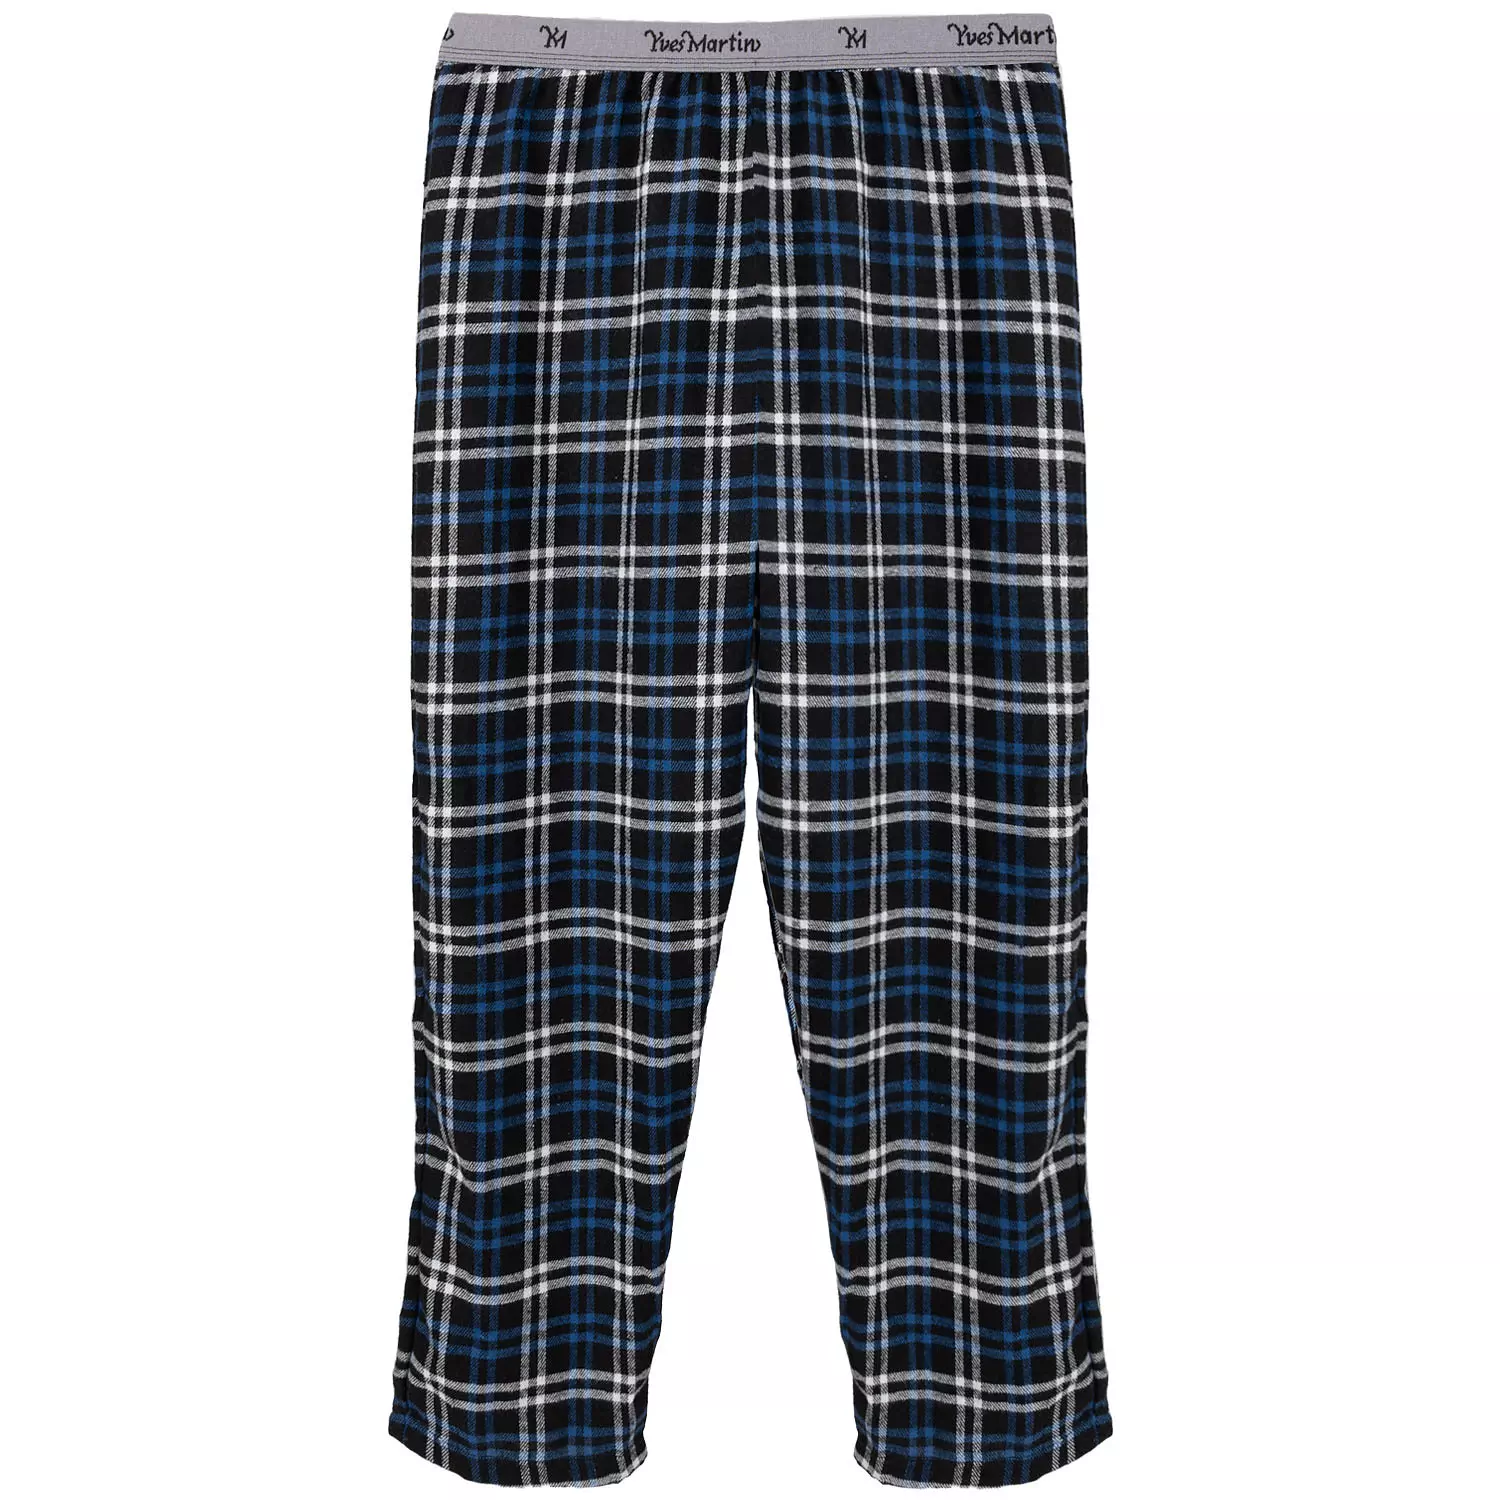 Yves Martin - Men's blue plaid flannel pajama pants, extra large (XL)